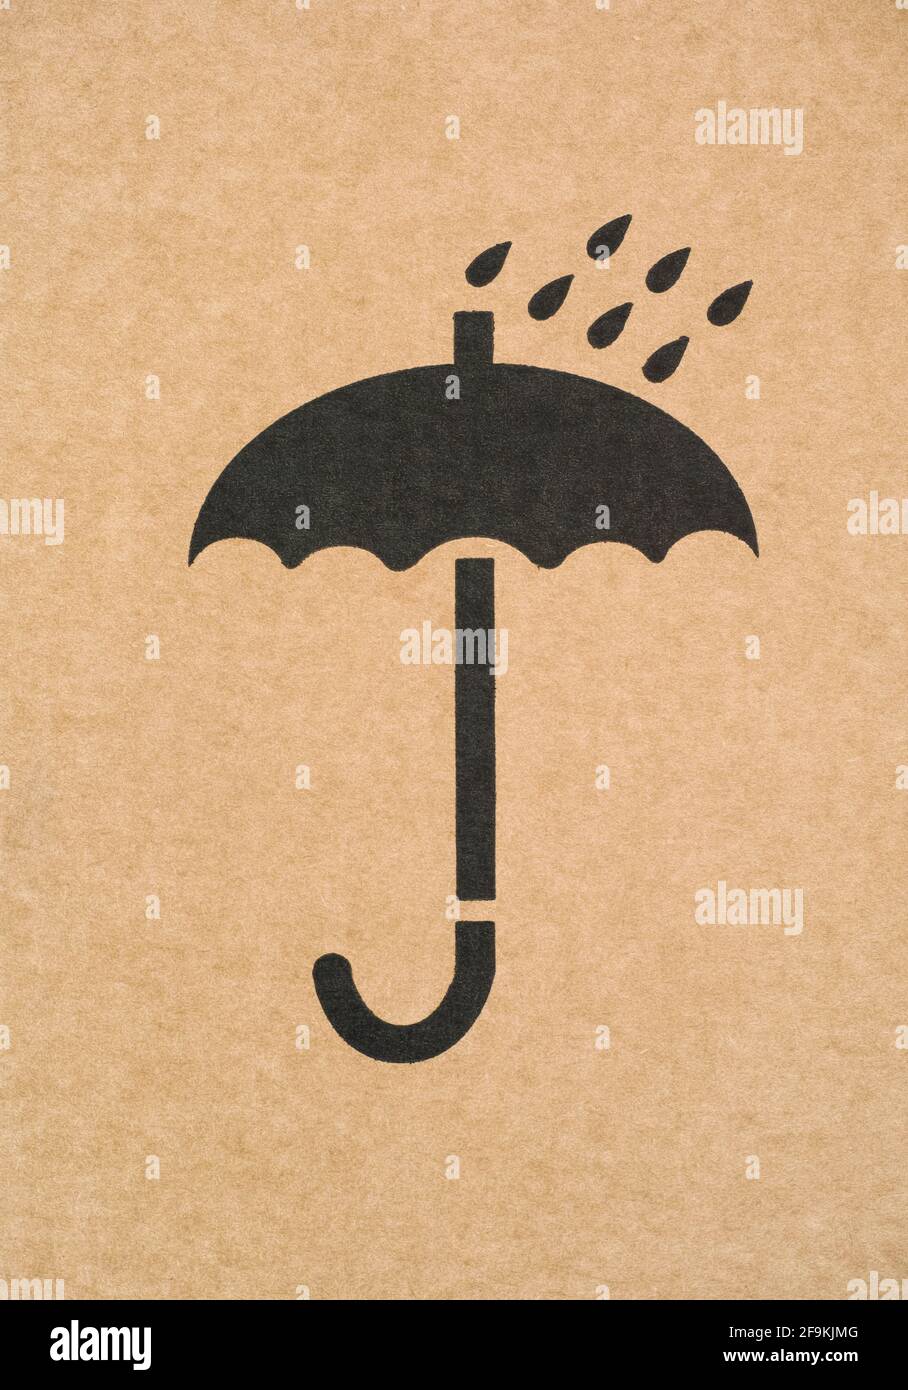 Símbolo de paraguas en cartón. Símbolo frágil o de embalaje. Primer plano  Fotografía de stock - Alamy